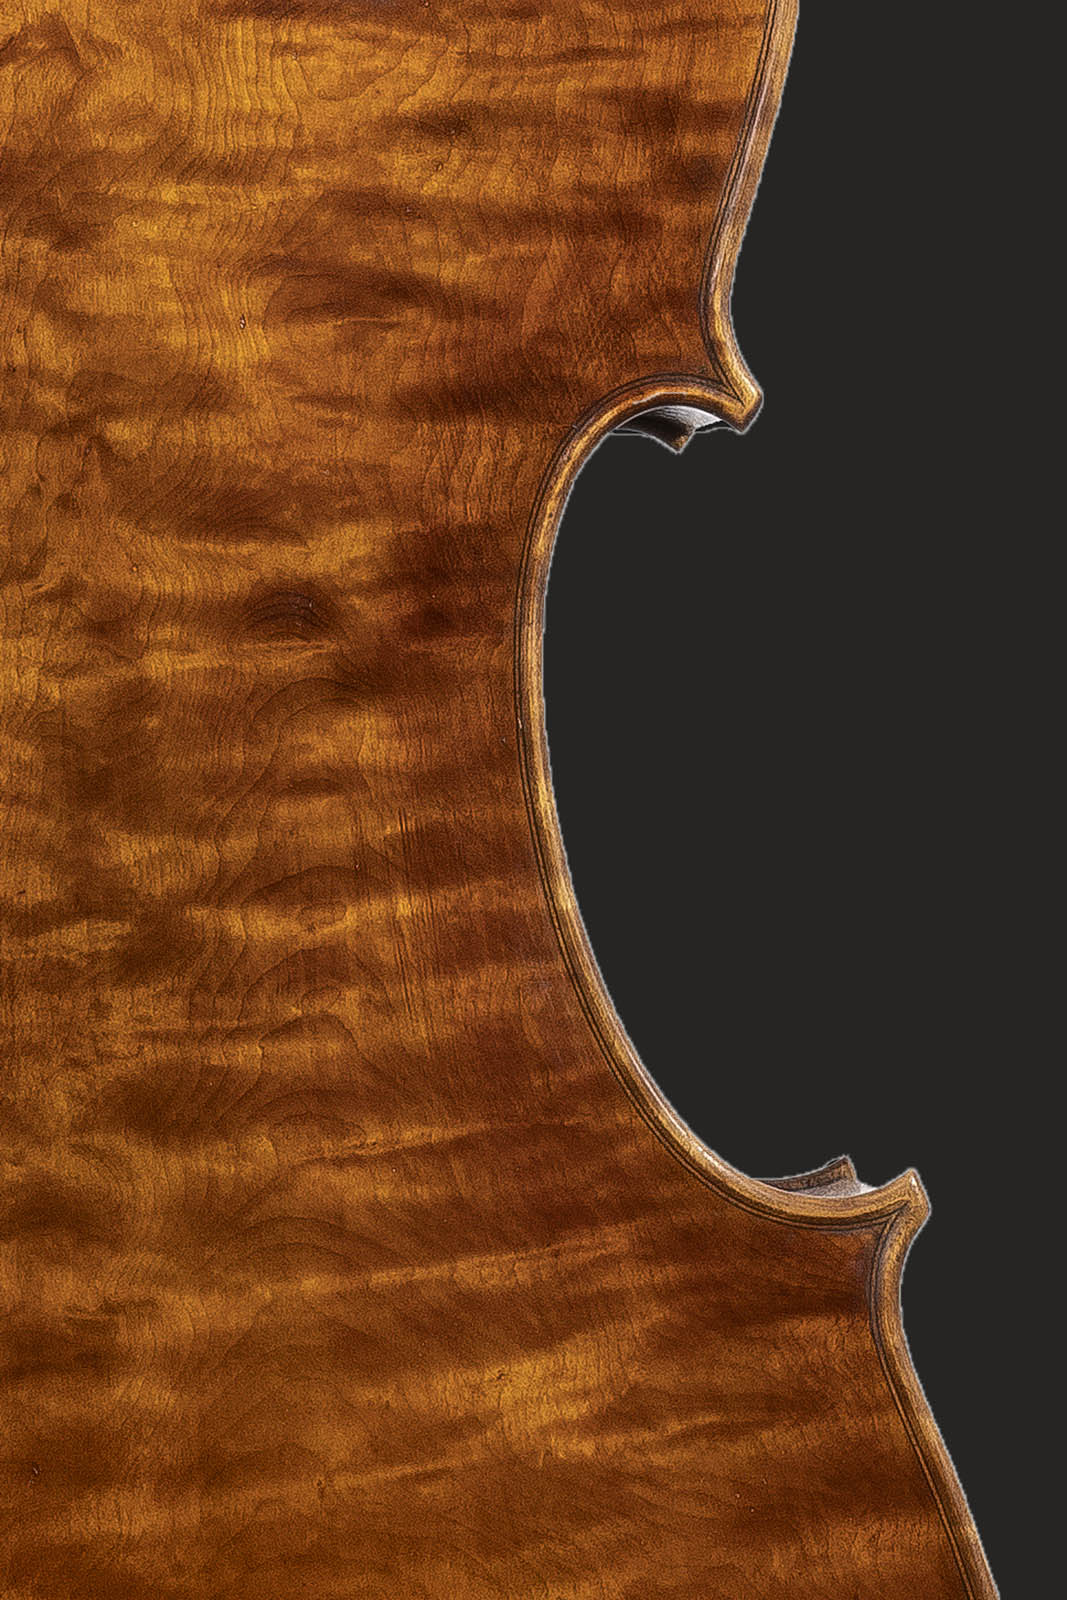 Antonio Stradivari Cremona 1730 “Cristiani“ “Kyoto“ - Image 4